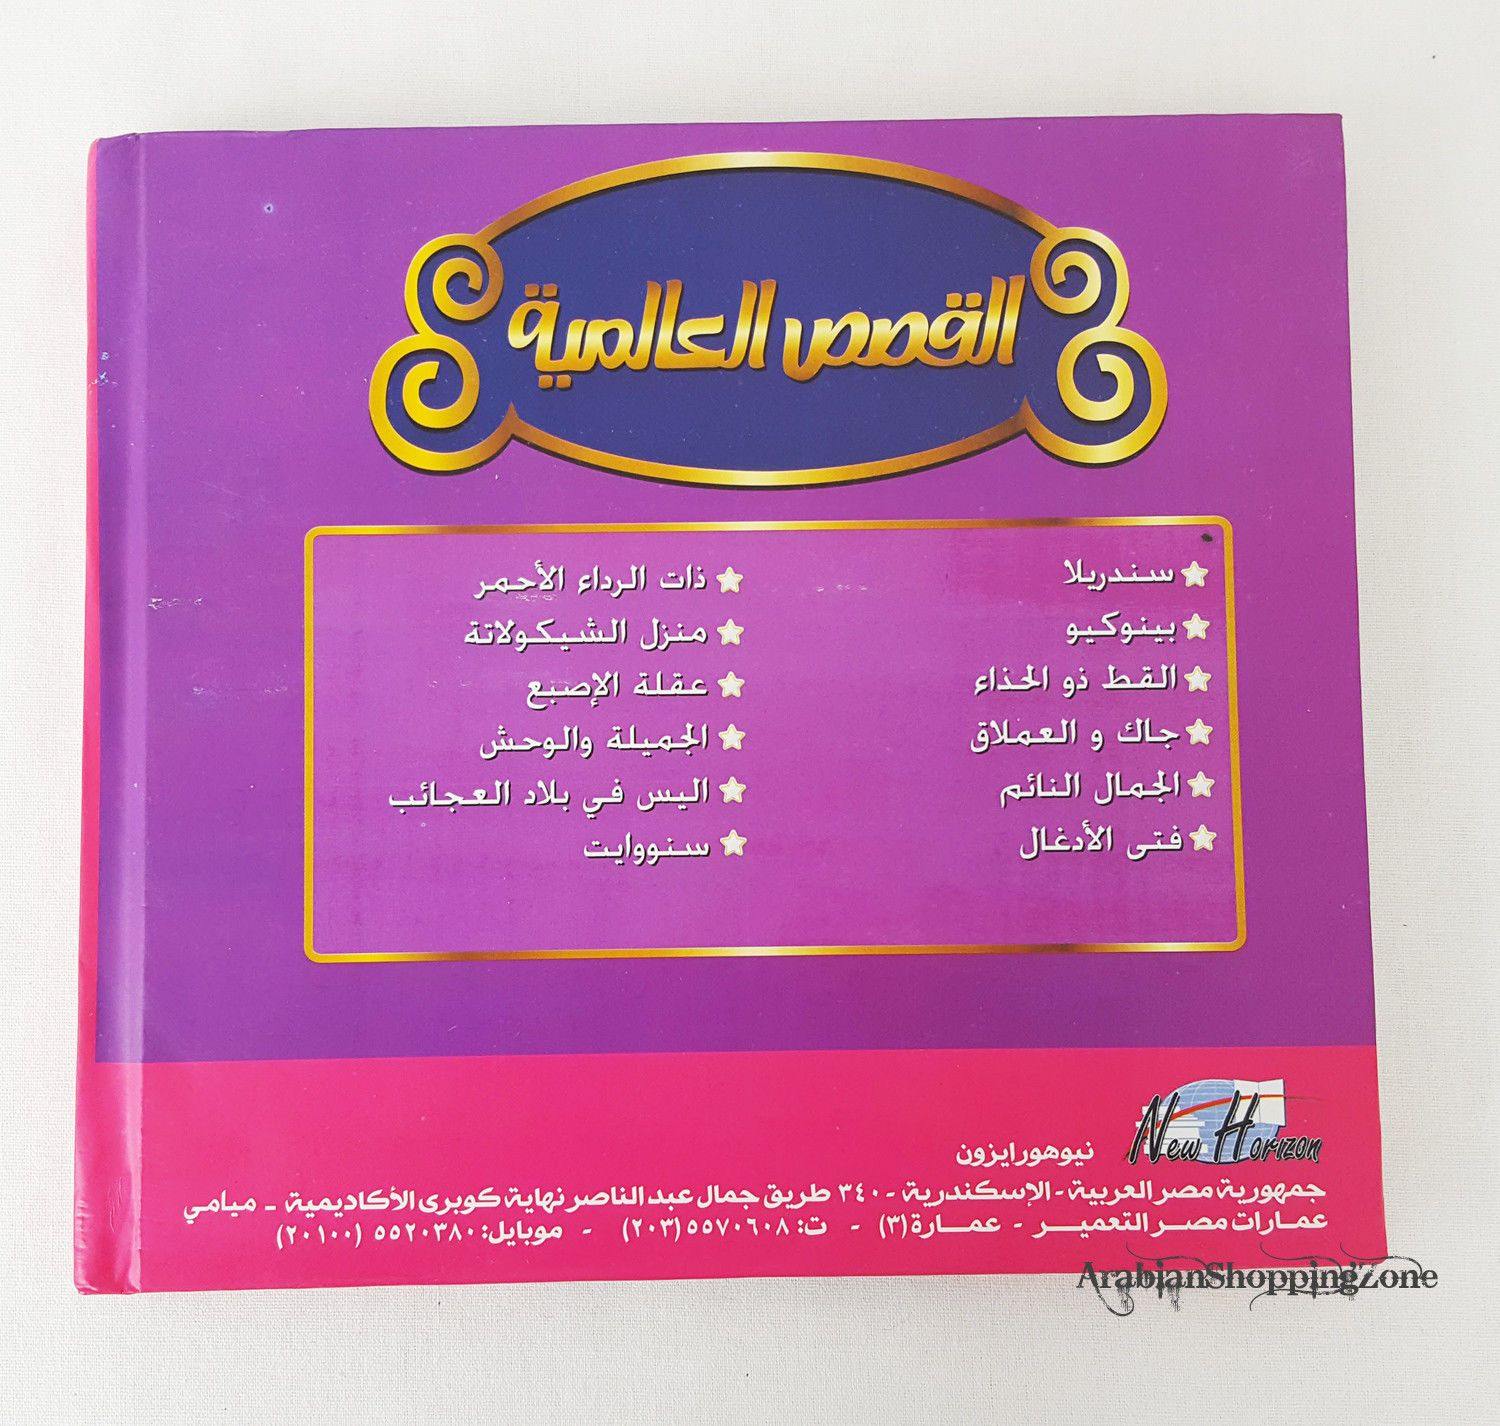 World Famous Stories (Arabic) - Arabian Shopping Zone